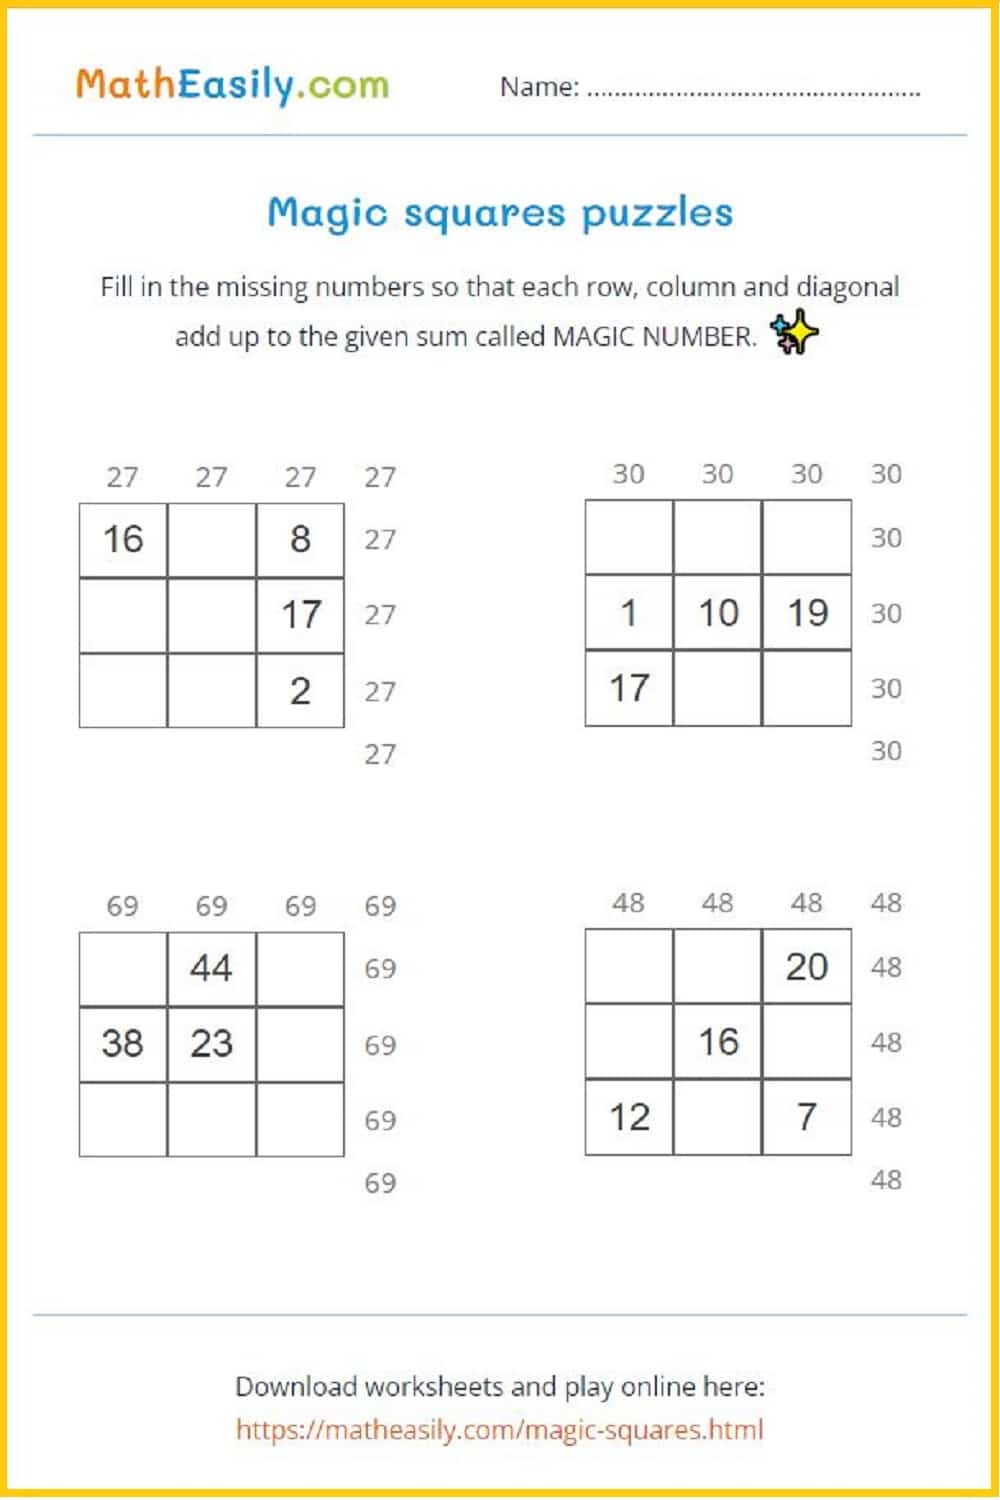 2nd grade math worksheets pdf free download. free printable grade 2 math worksheets pdf. grade 2 math worksheets pdf free download.